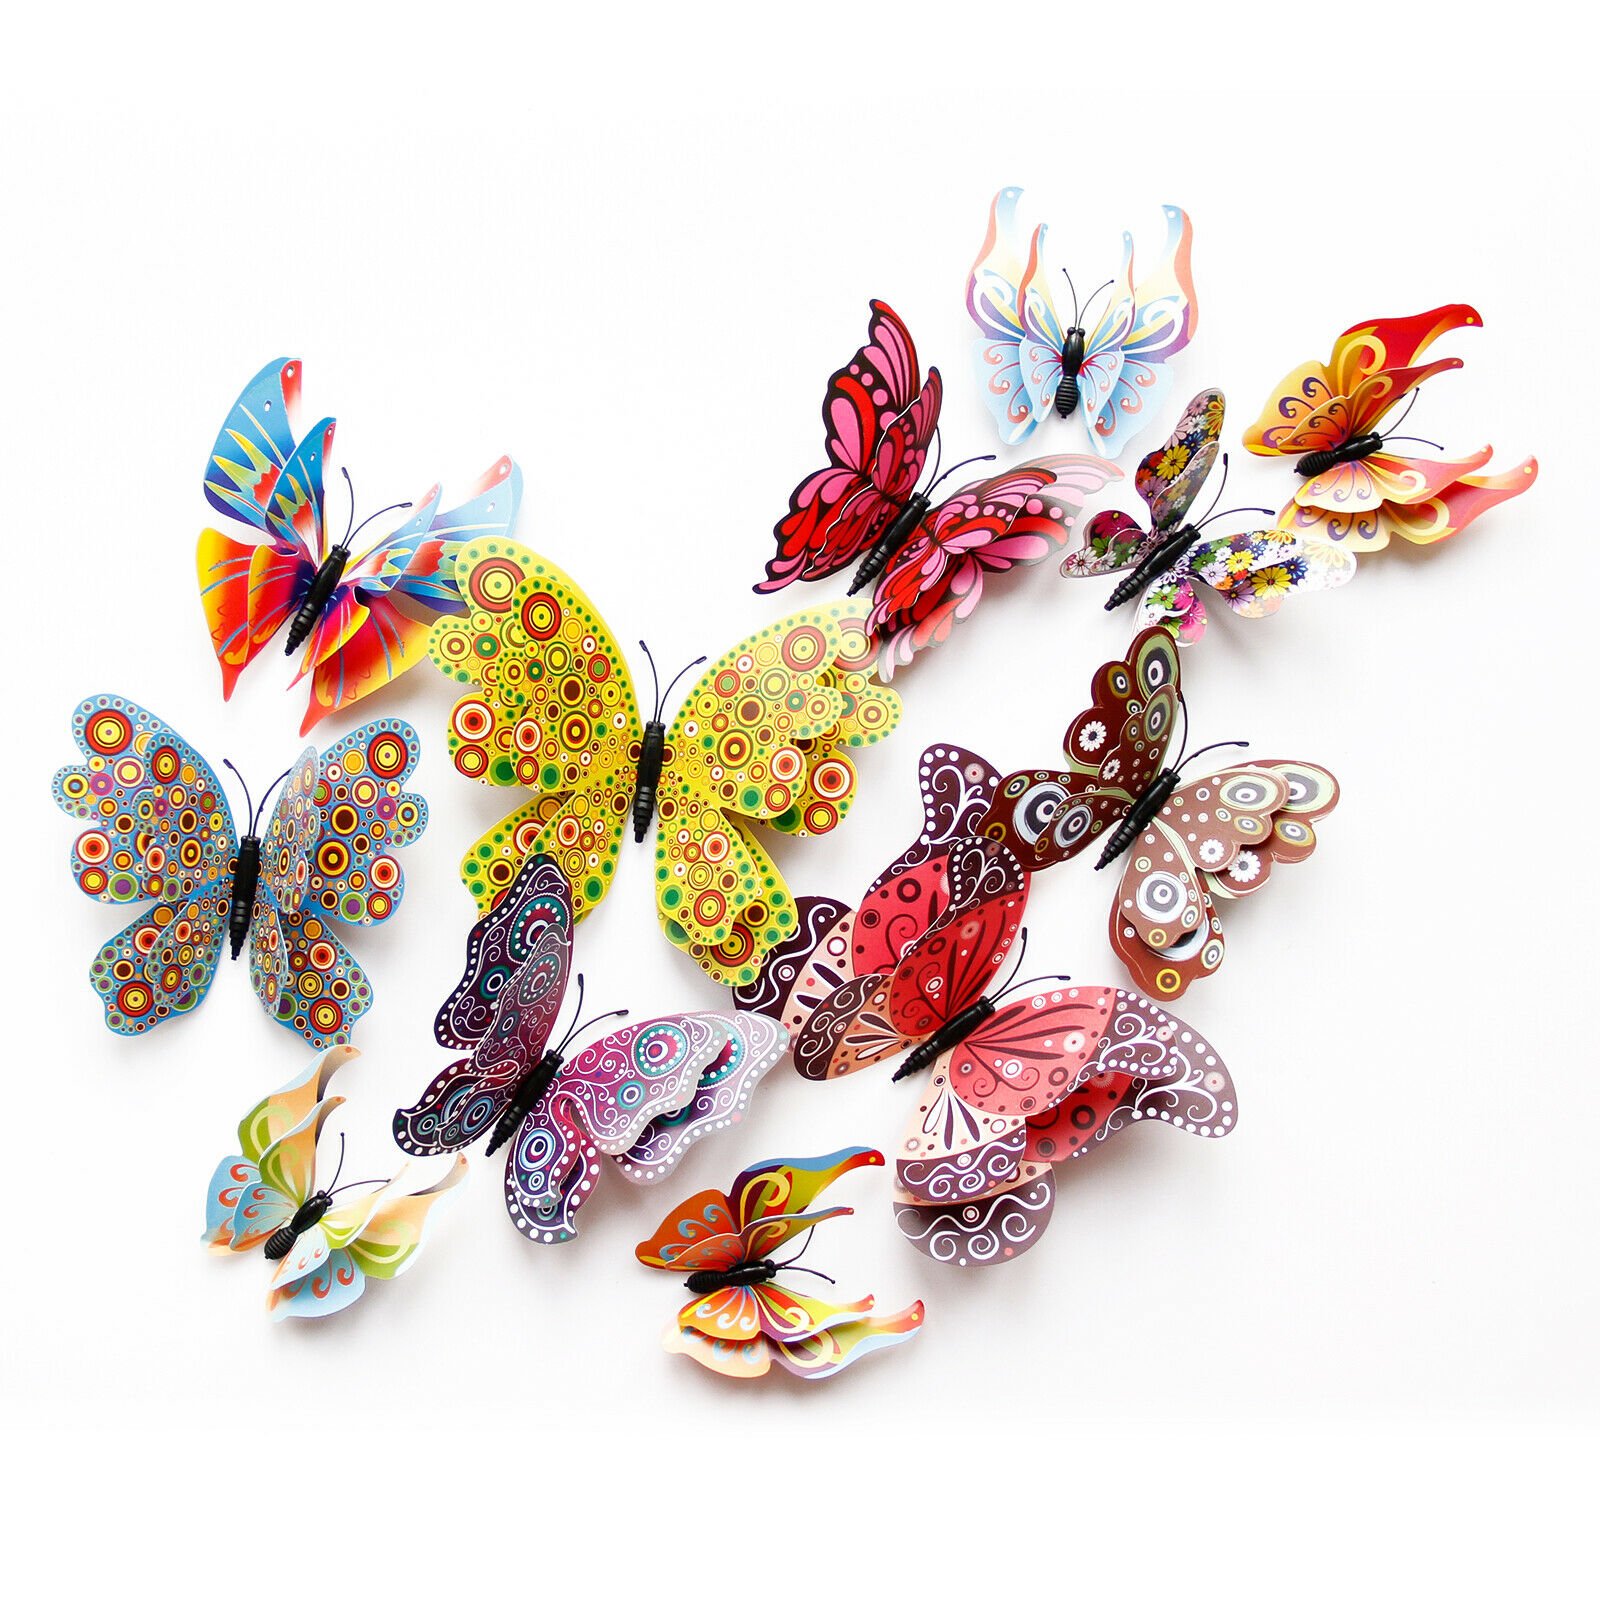 Details about   Mixed Design 3D Butterfly Wall Stickers PVC Children Room Decal Art Decor 12Pcs